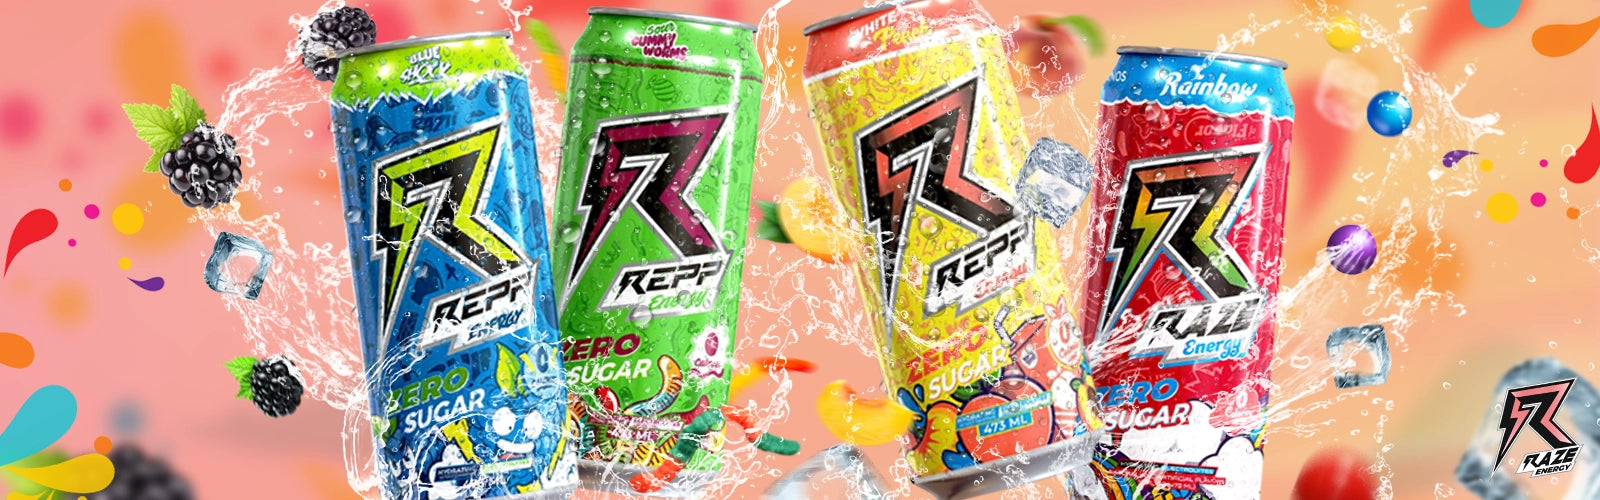 Repp-Energy-Drink